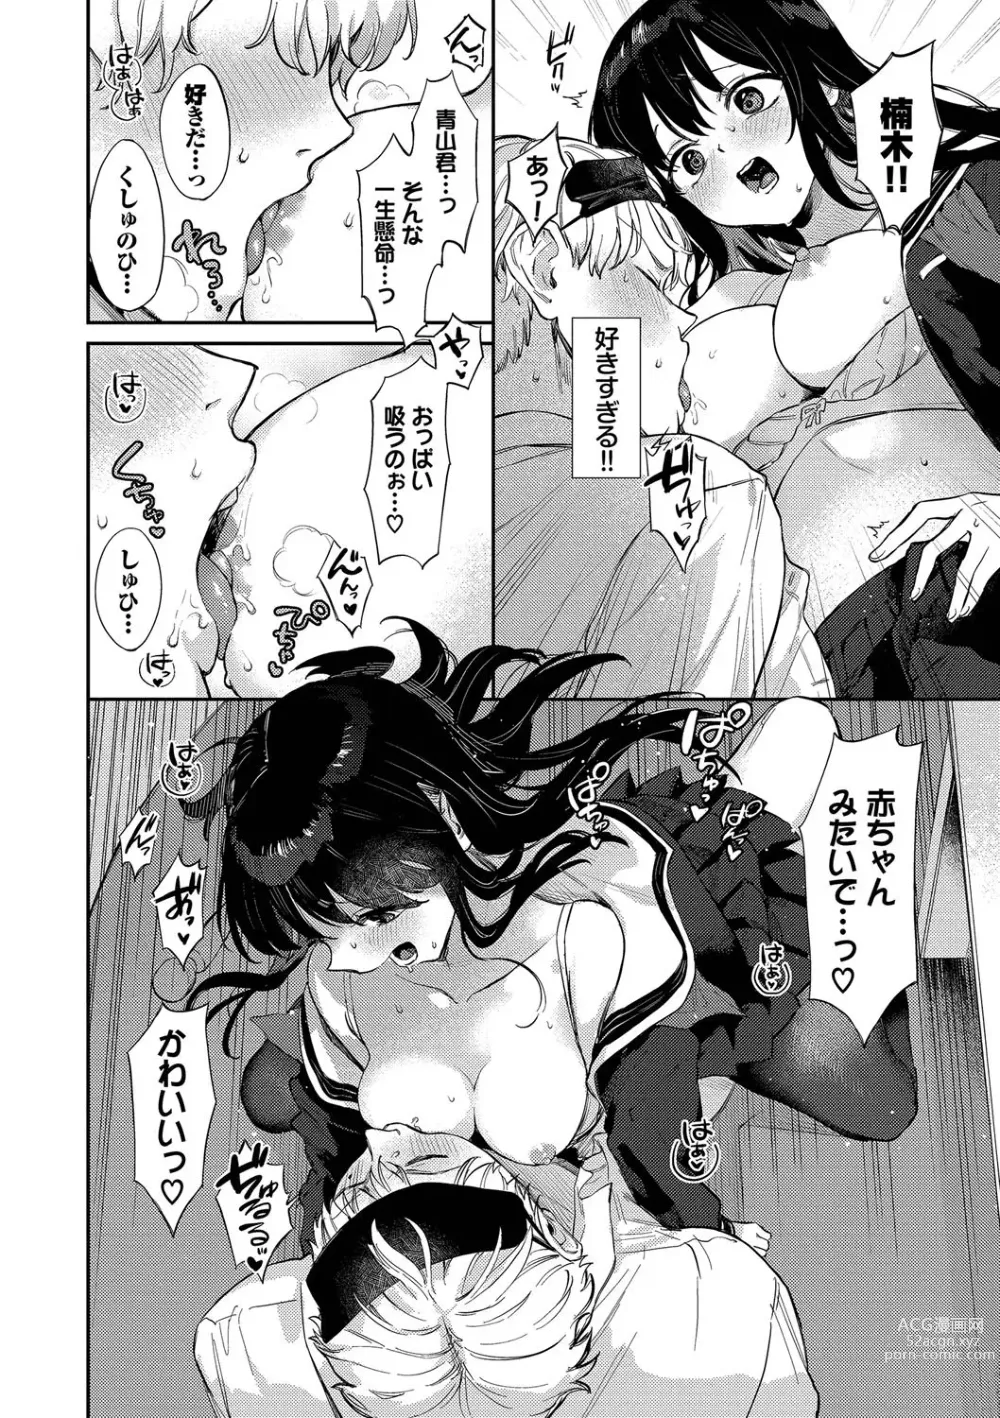 Page 23 of manga Mutsuri Bloom